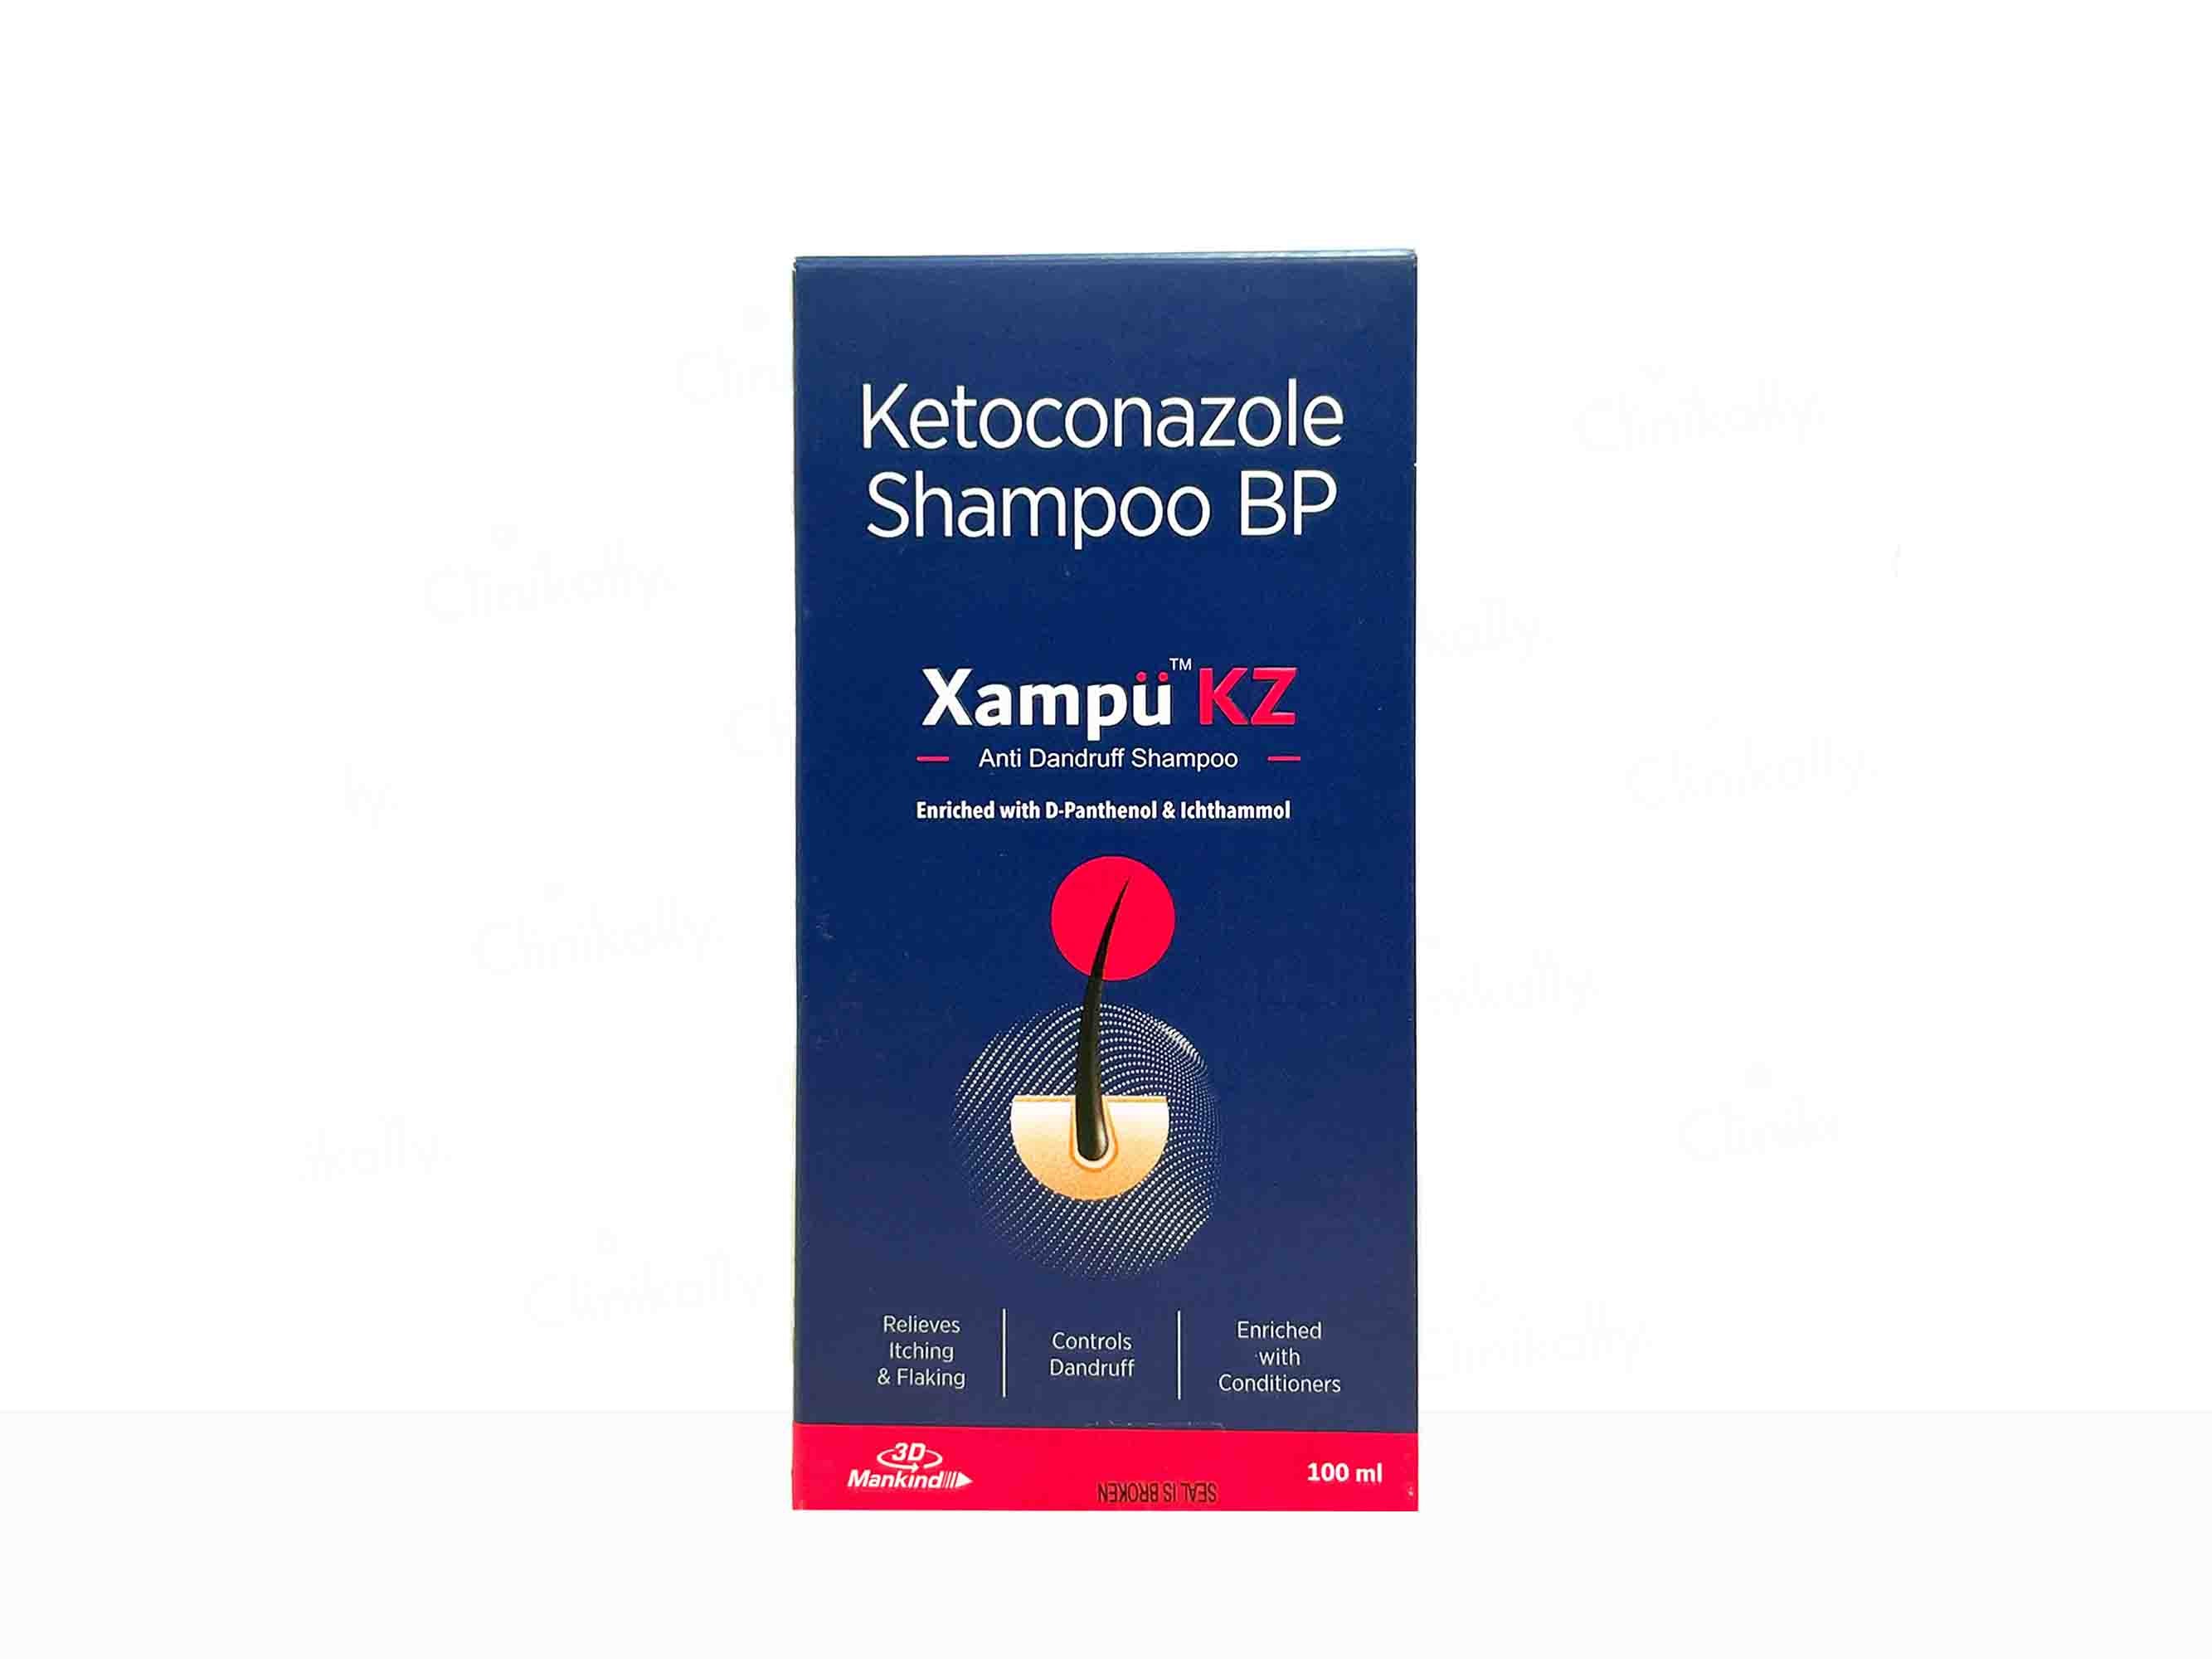 Xampu-KZ Anti-Dandruff Shampoo